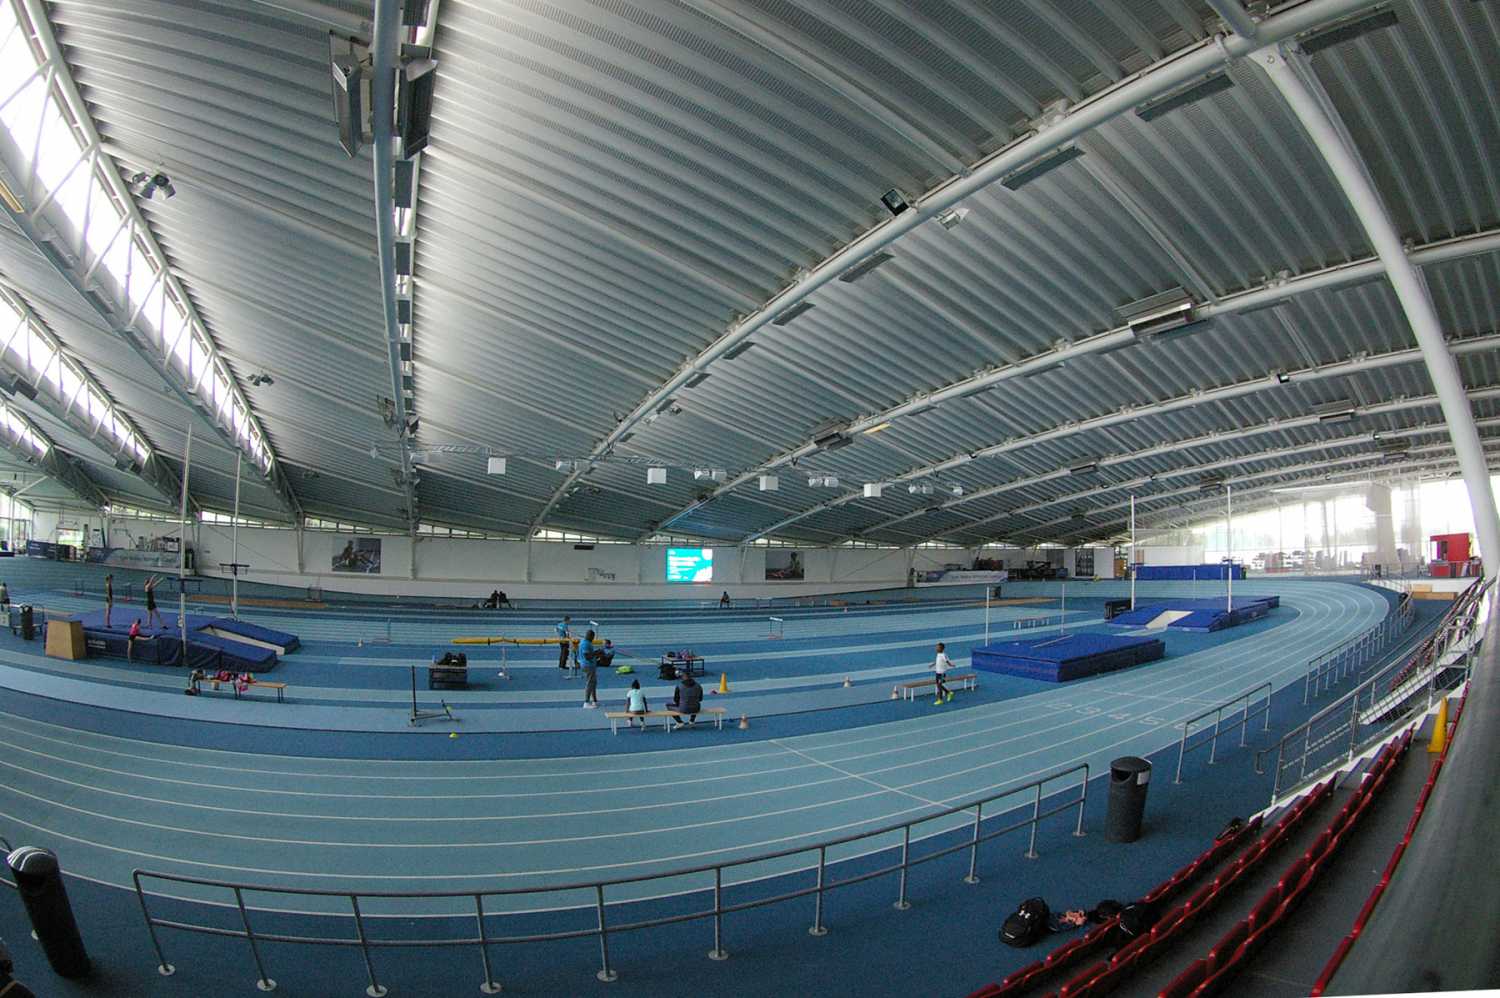 Lee Valley Athletics Centre in Edmonton